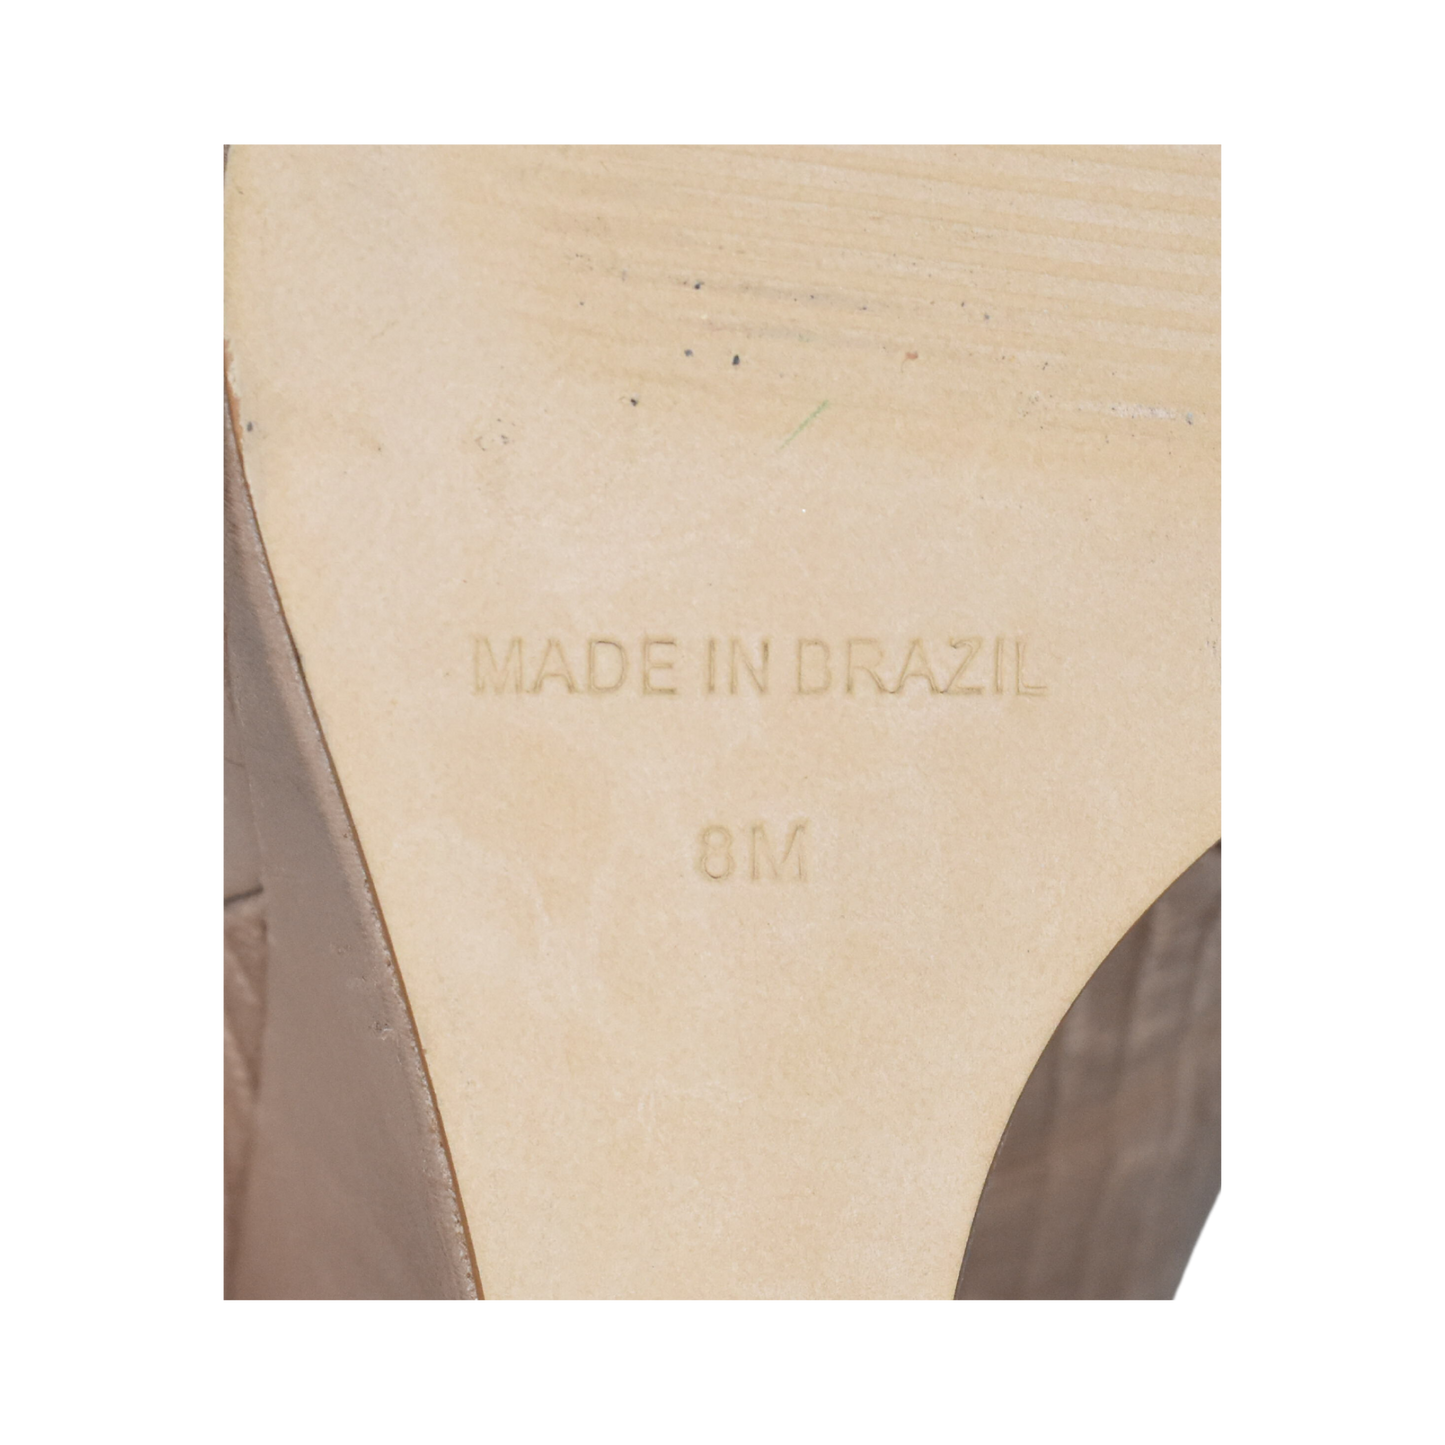 Steve Madden Wedge-Heels Pumps Light Tan/ Nude Size 8M SKU 000146-6